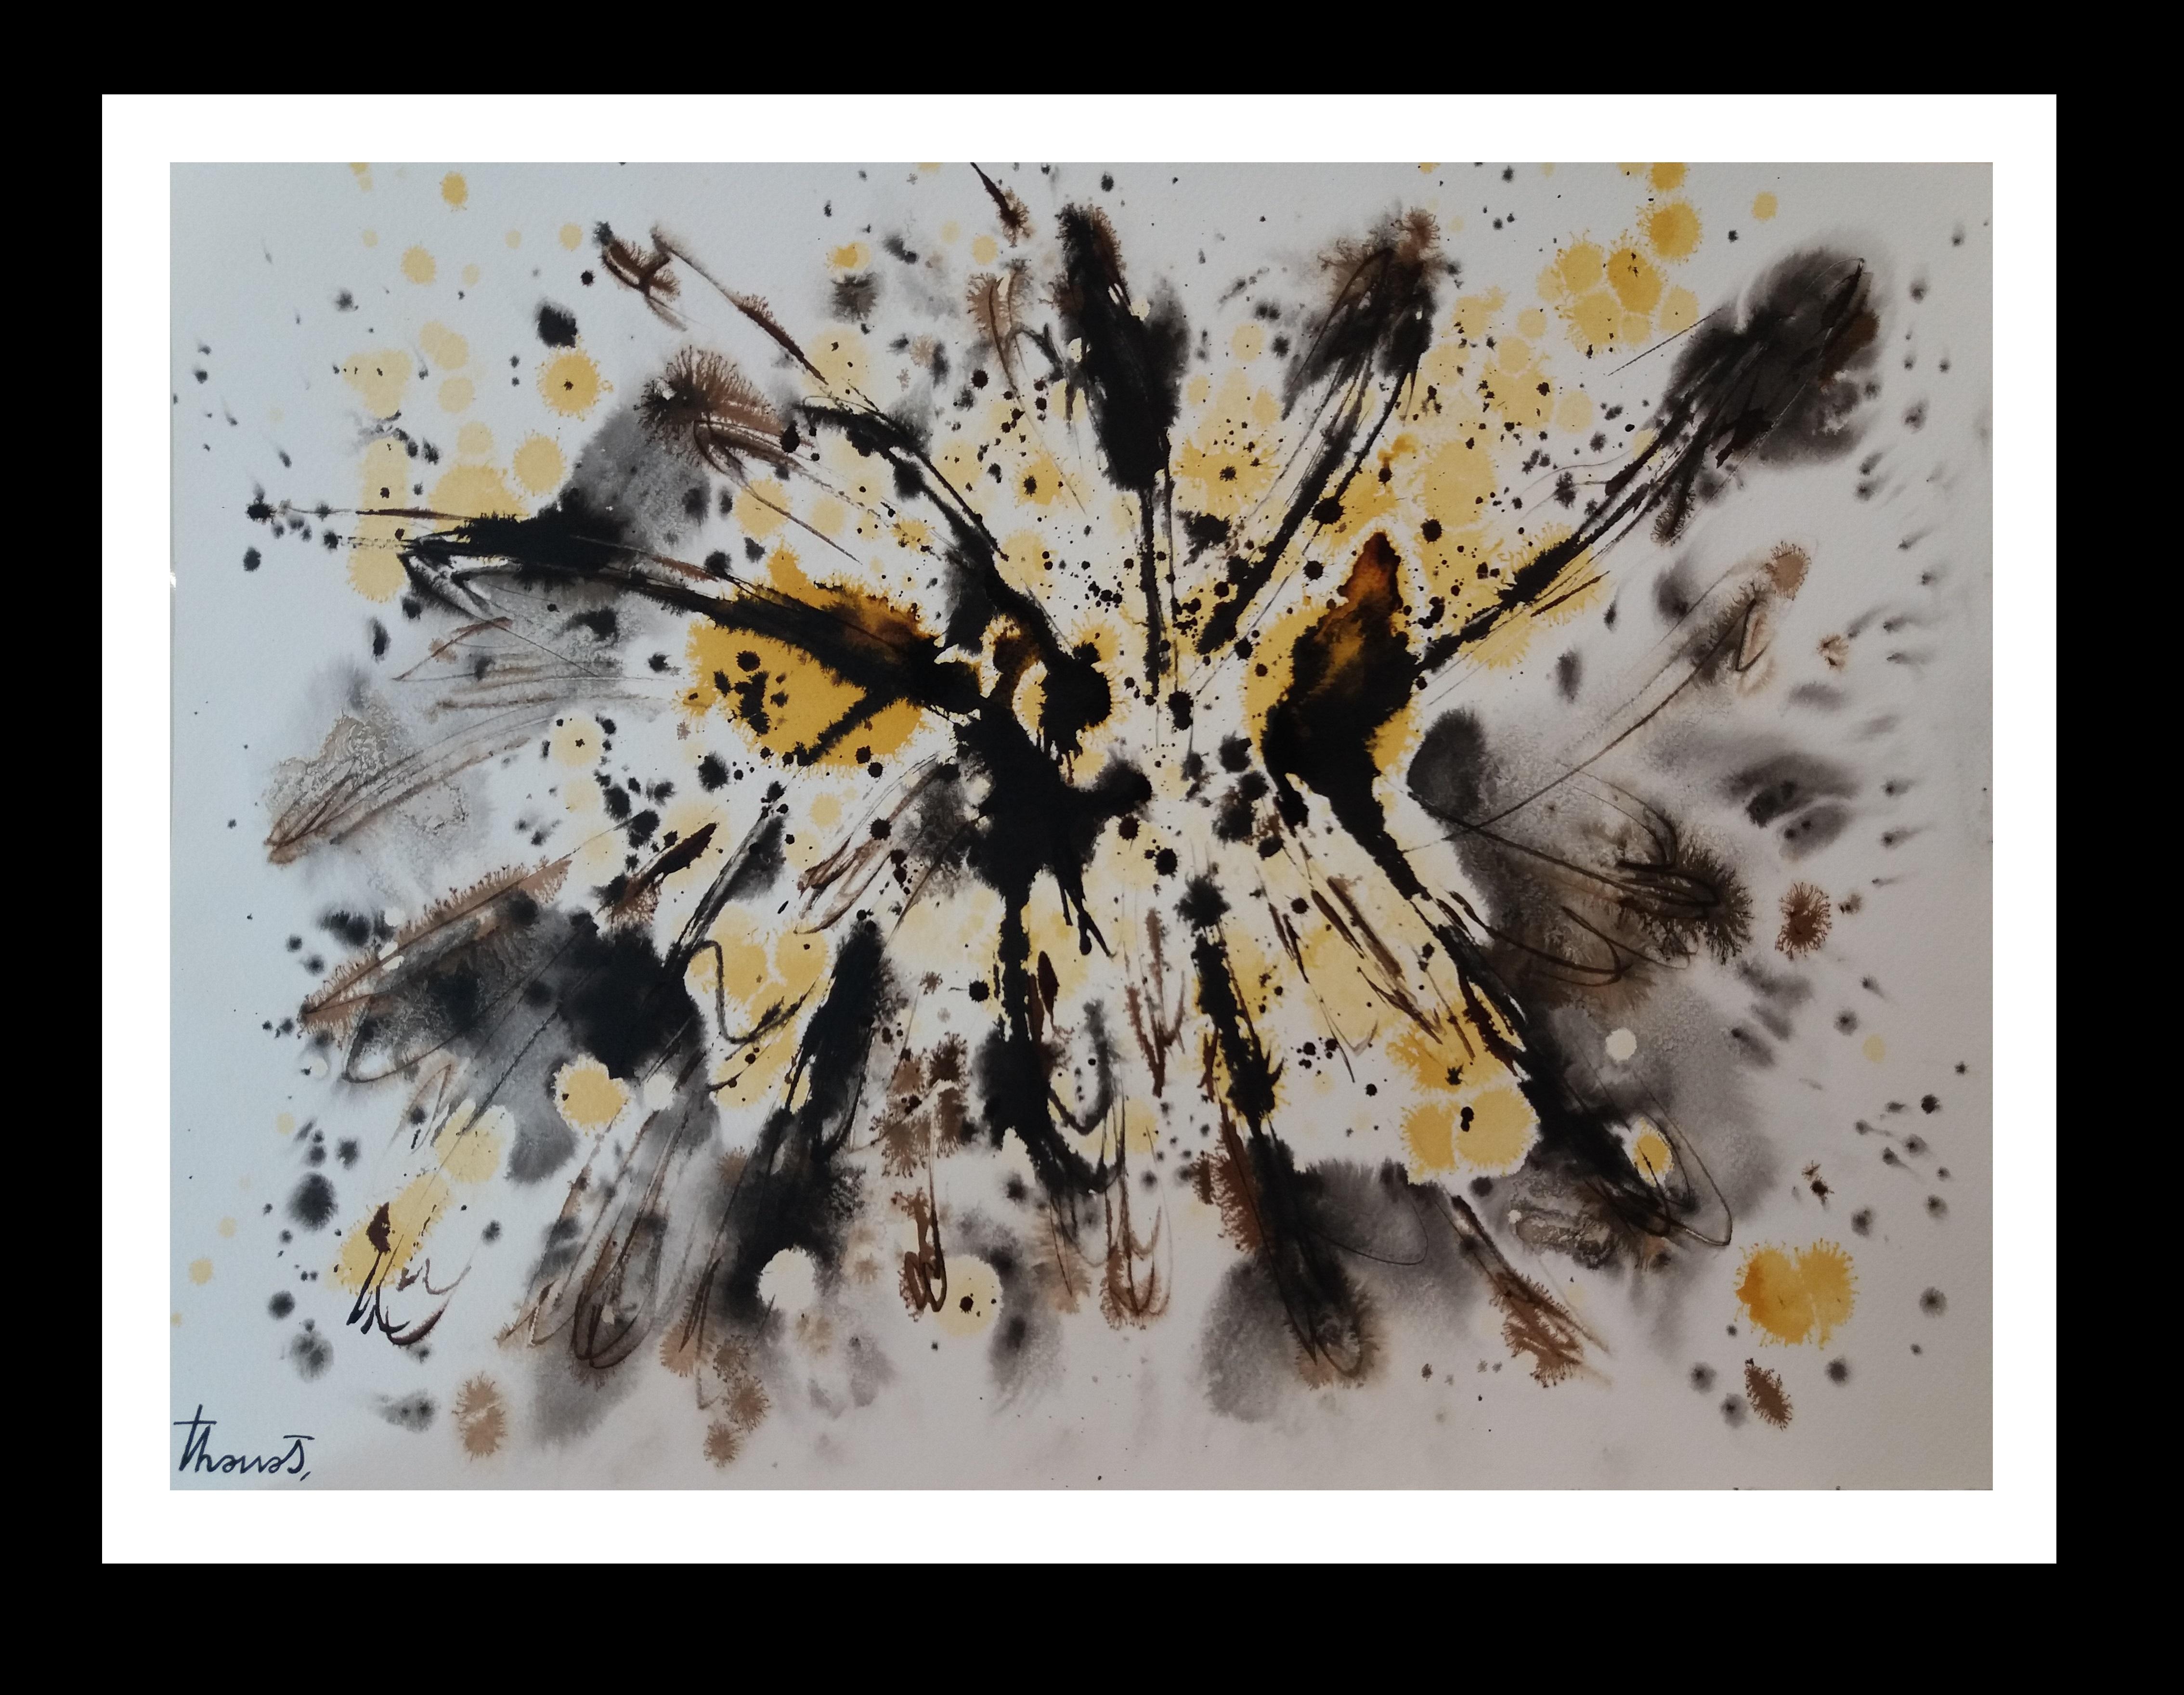 Josep THARRATS Abstract Painting - Tharrats  Black  Yellow original abstract  acrylic paper painting